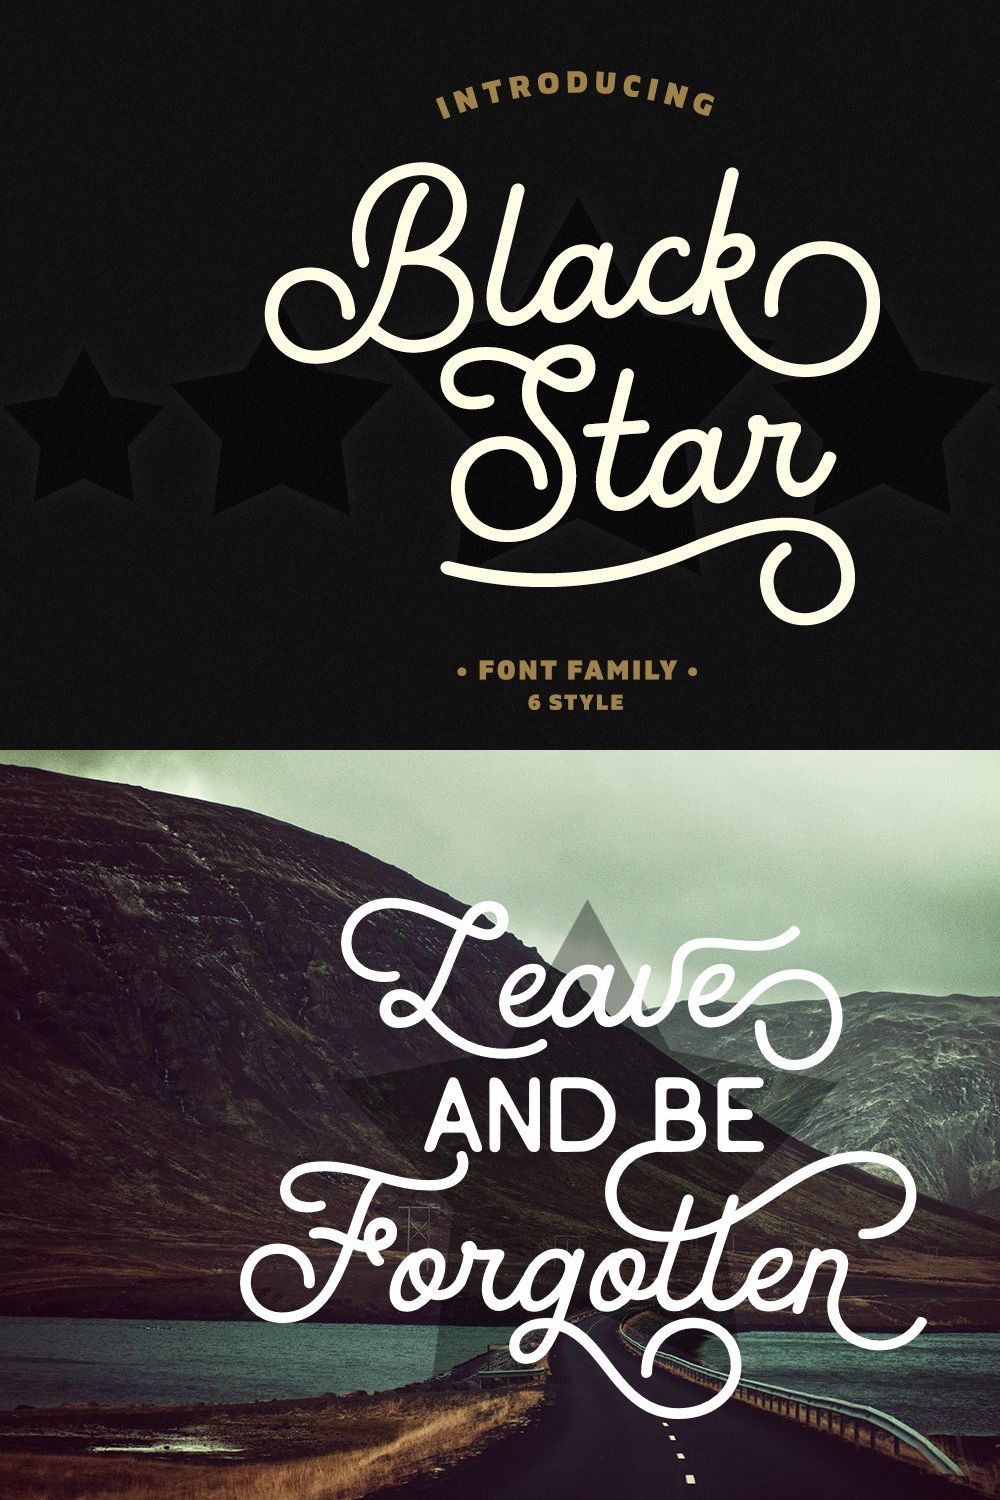 Black Star pinterest preview image.